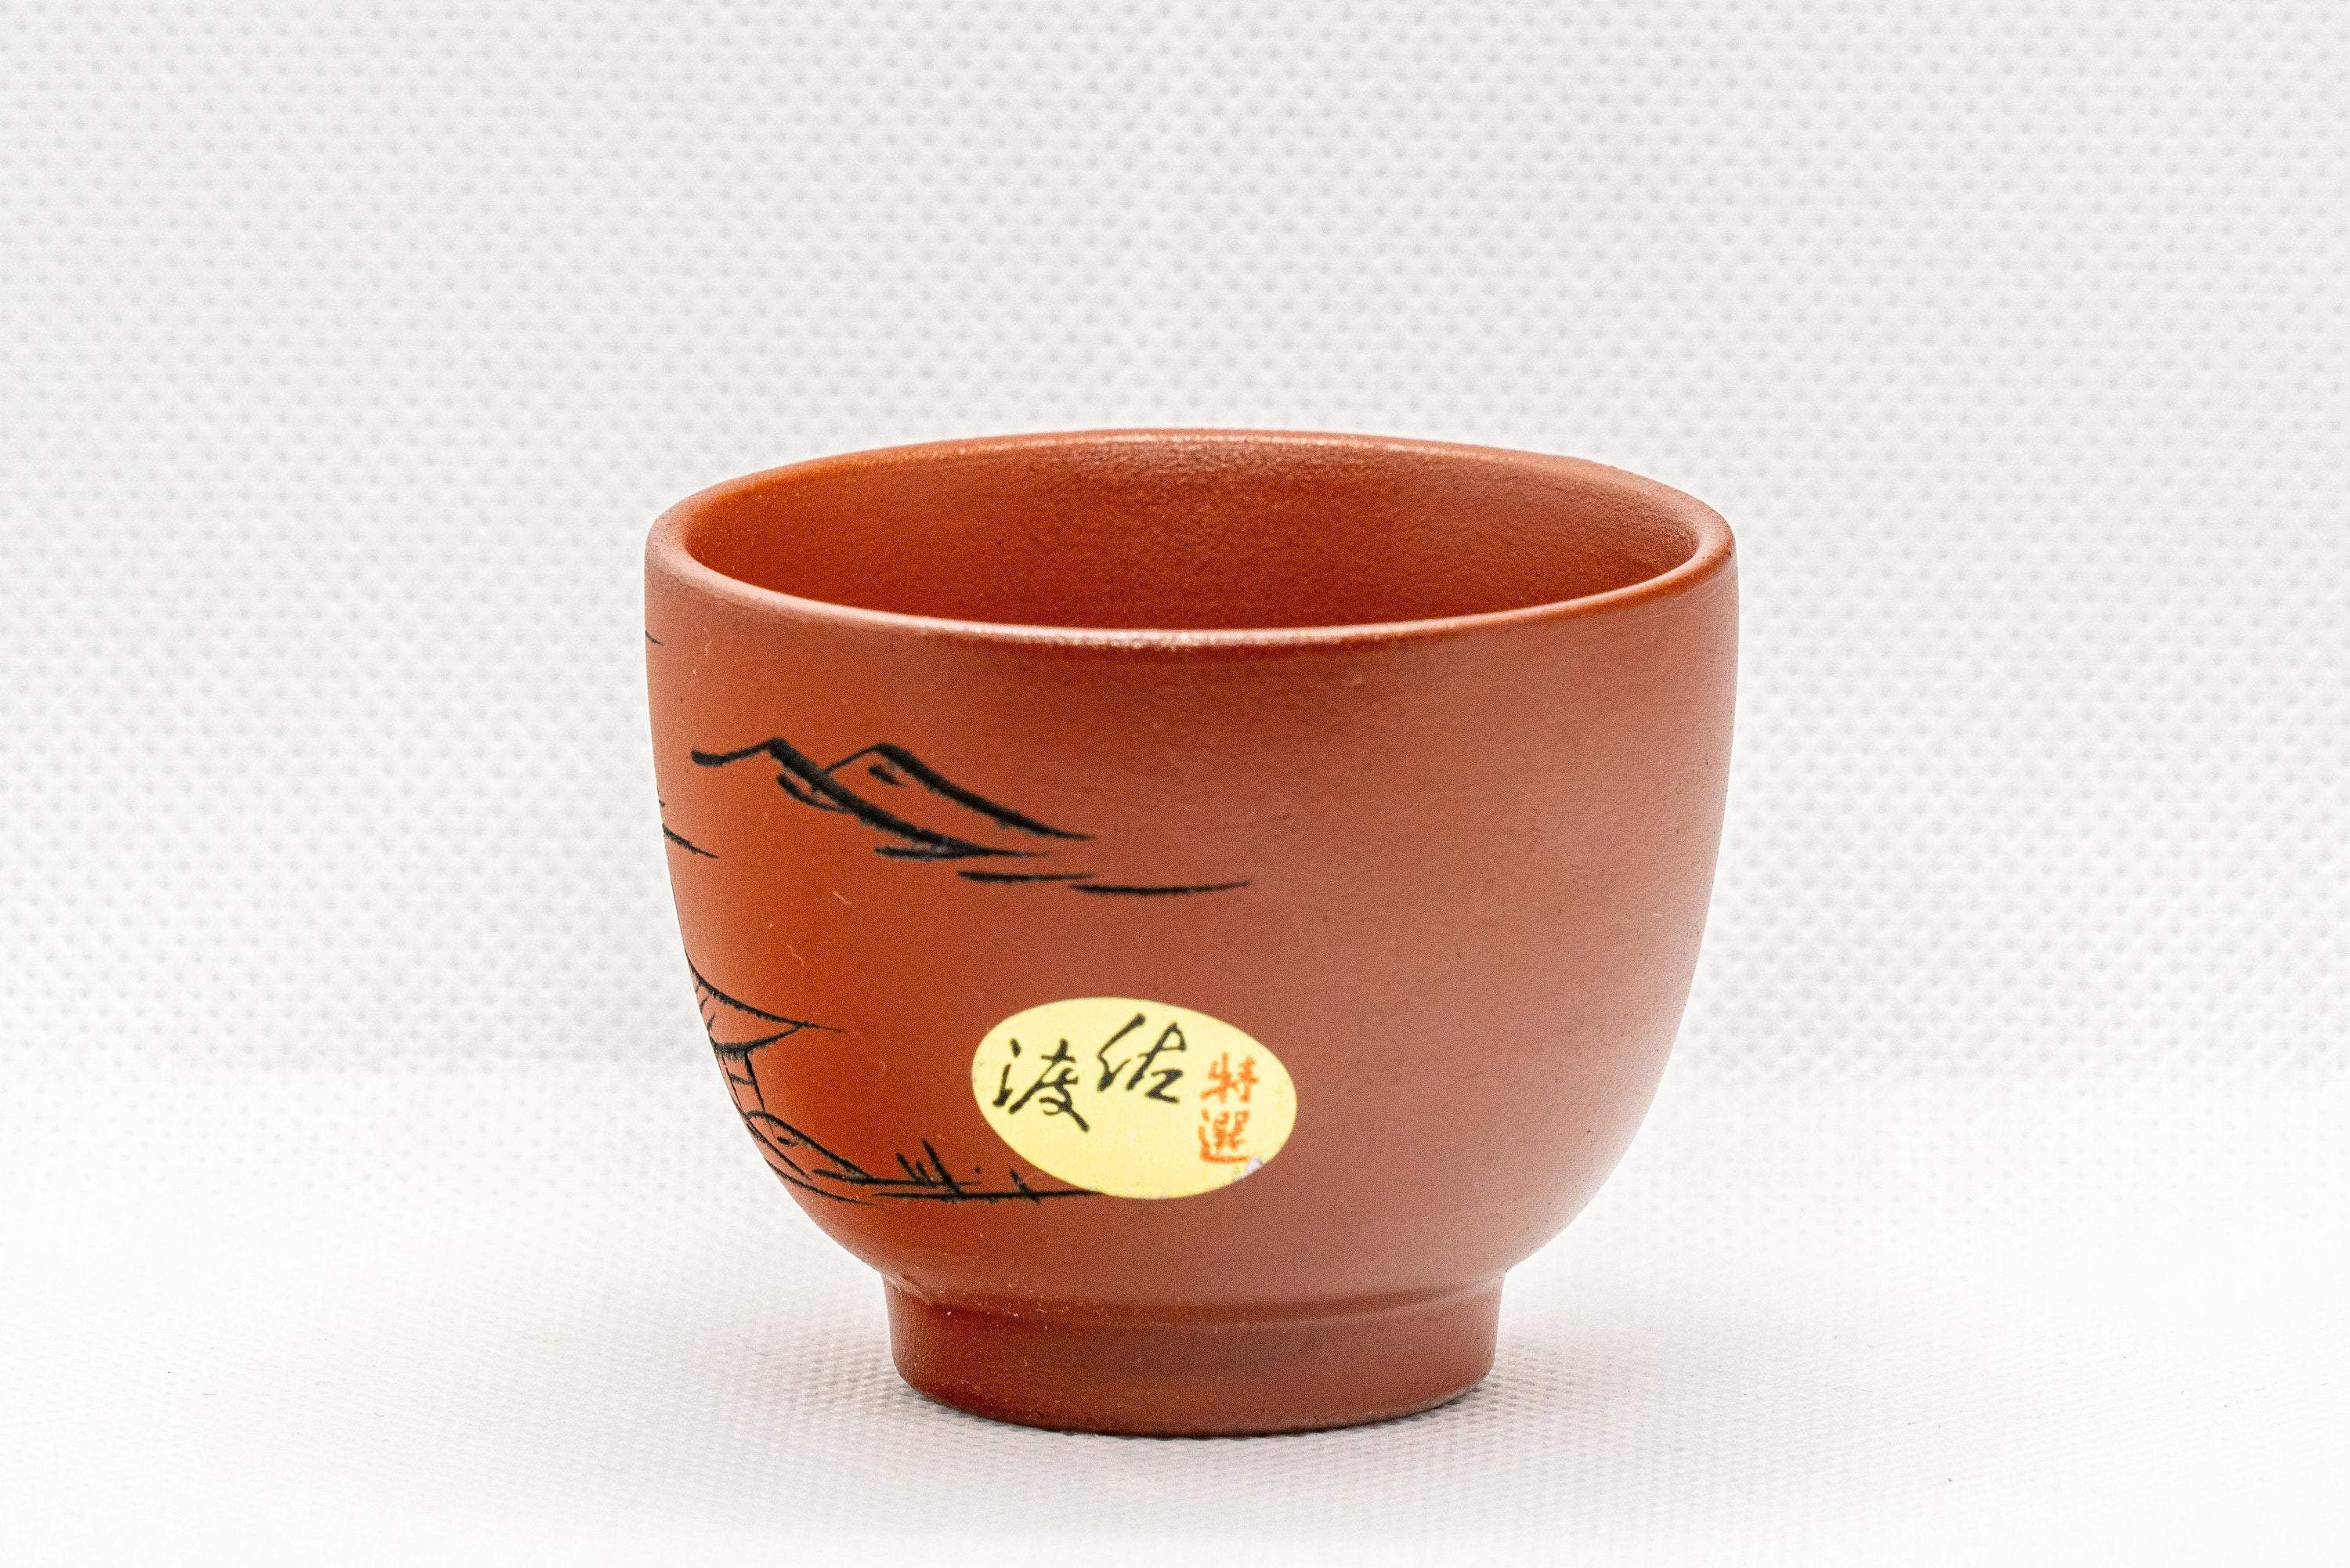 Japanese Teacups - Pair of Tokoname-yaki Senchawan - 60ml